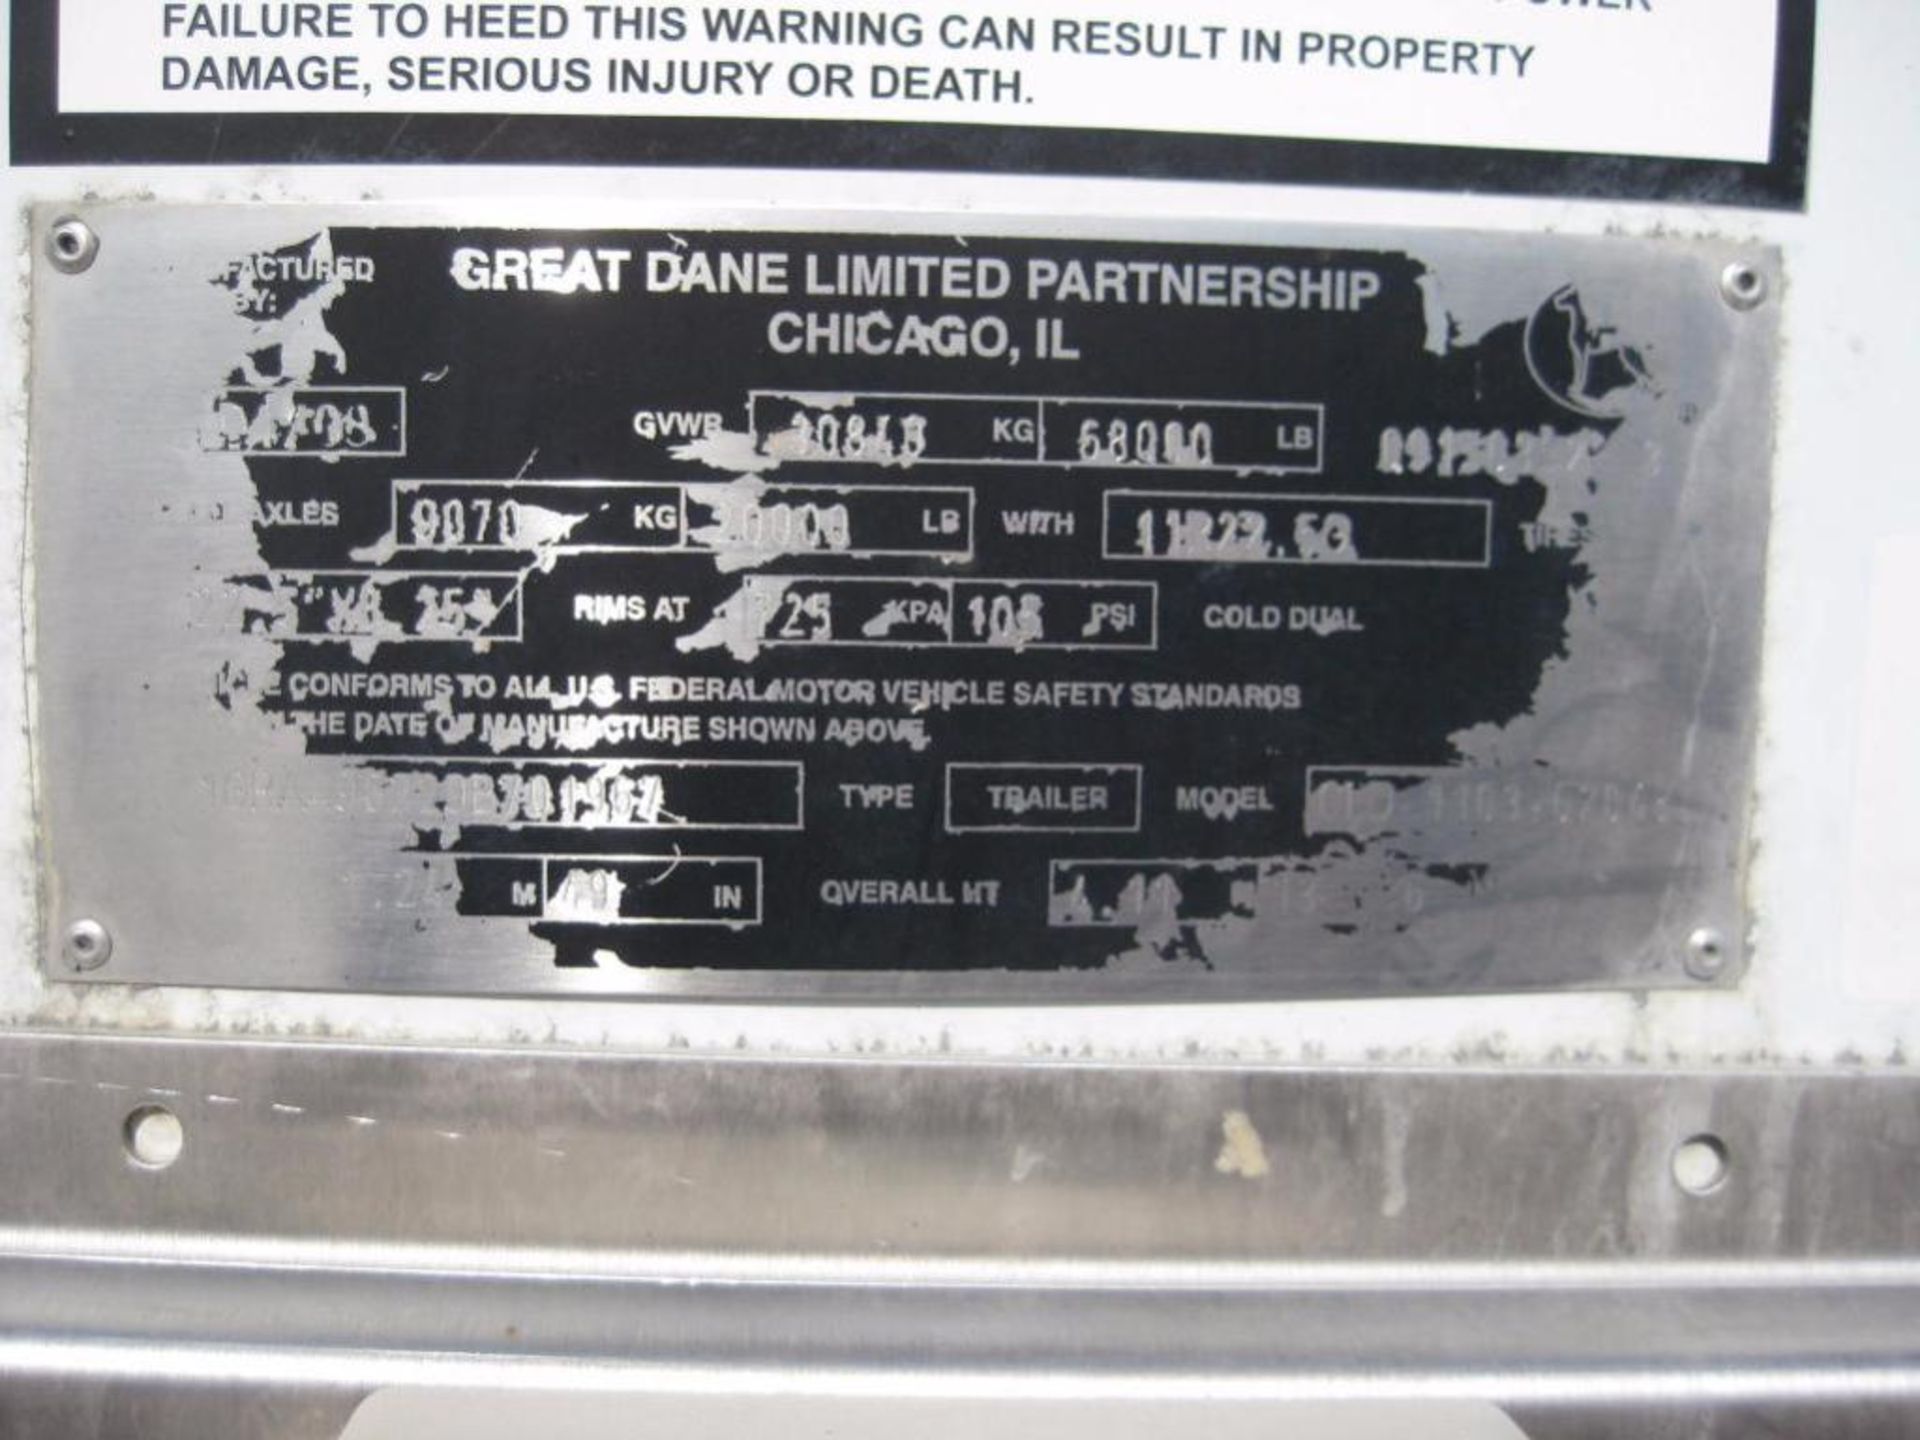 2009 Great Dane 48' Dry Trailer, VIN # 1GRAA96229B701967, Unit 152 - Image 4 of 7